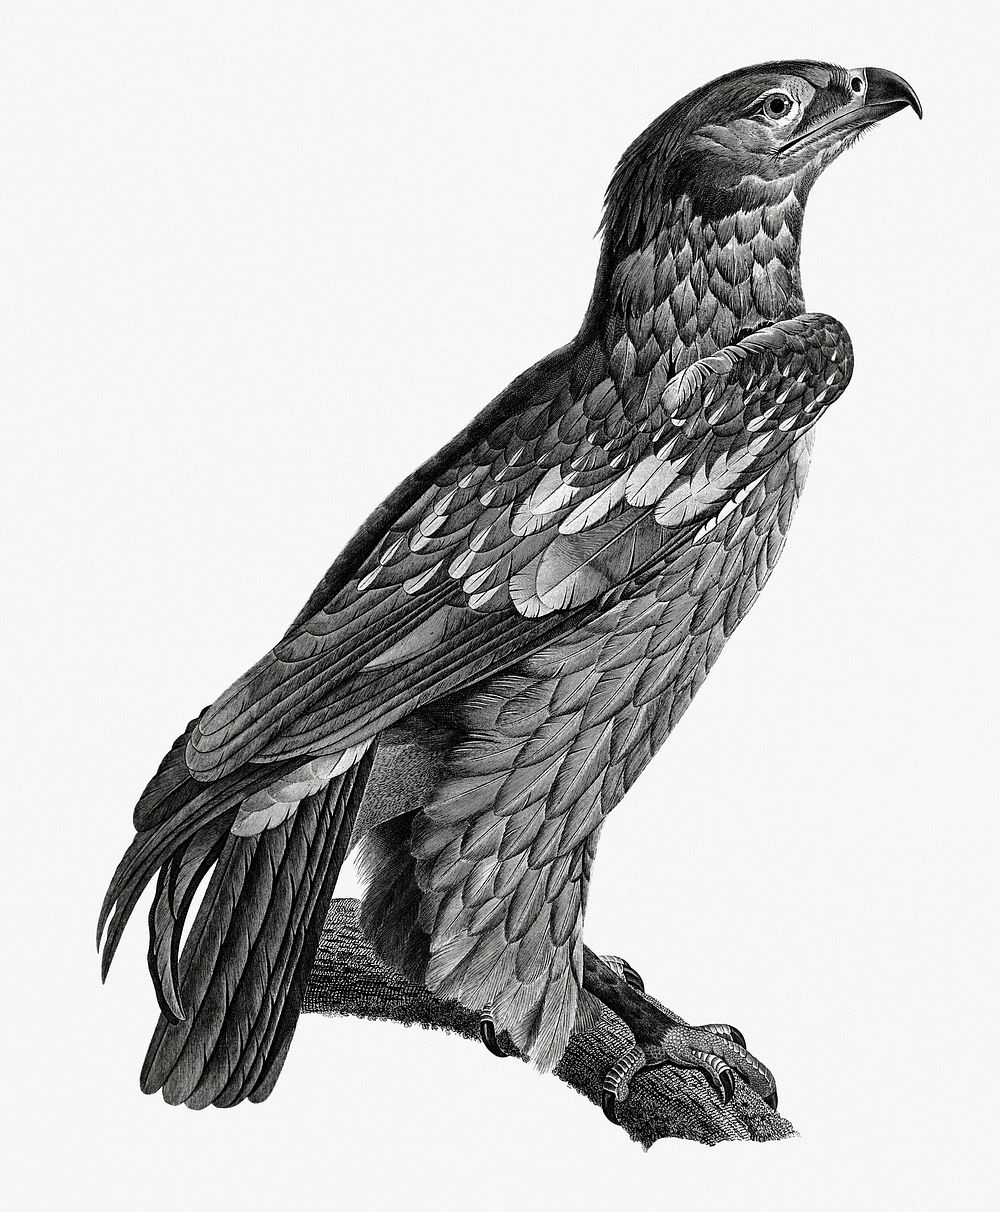 Vintage illustration of Young Spotted eagle